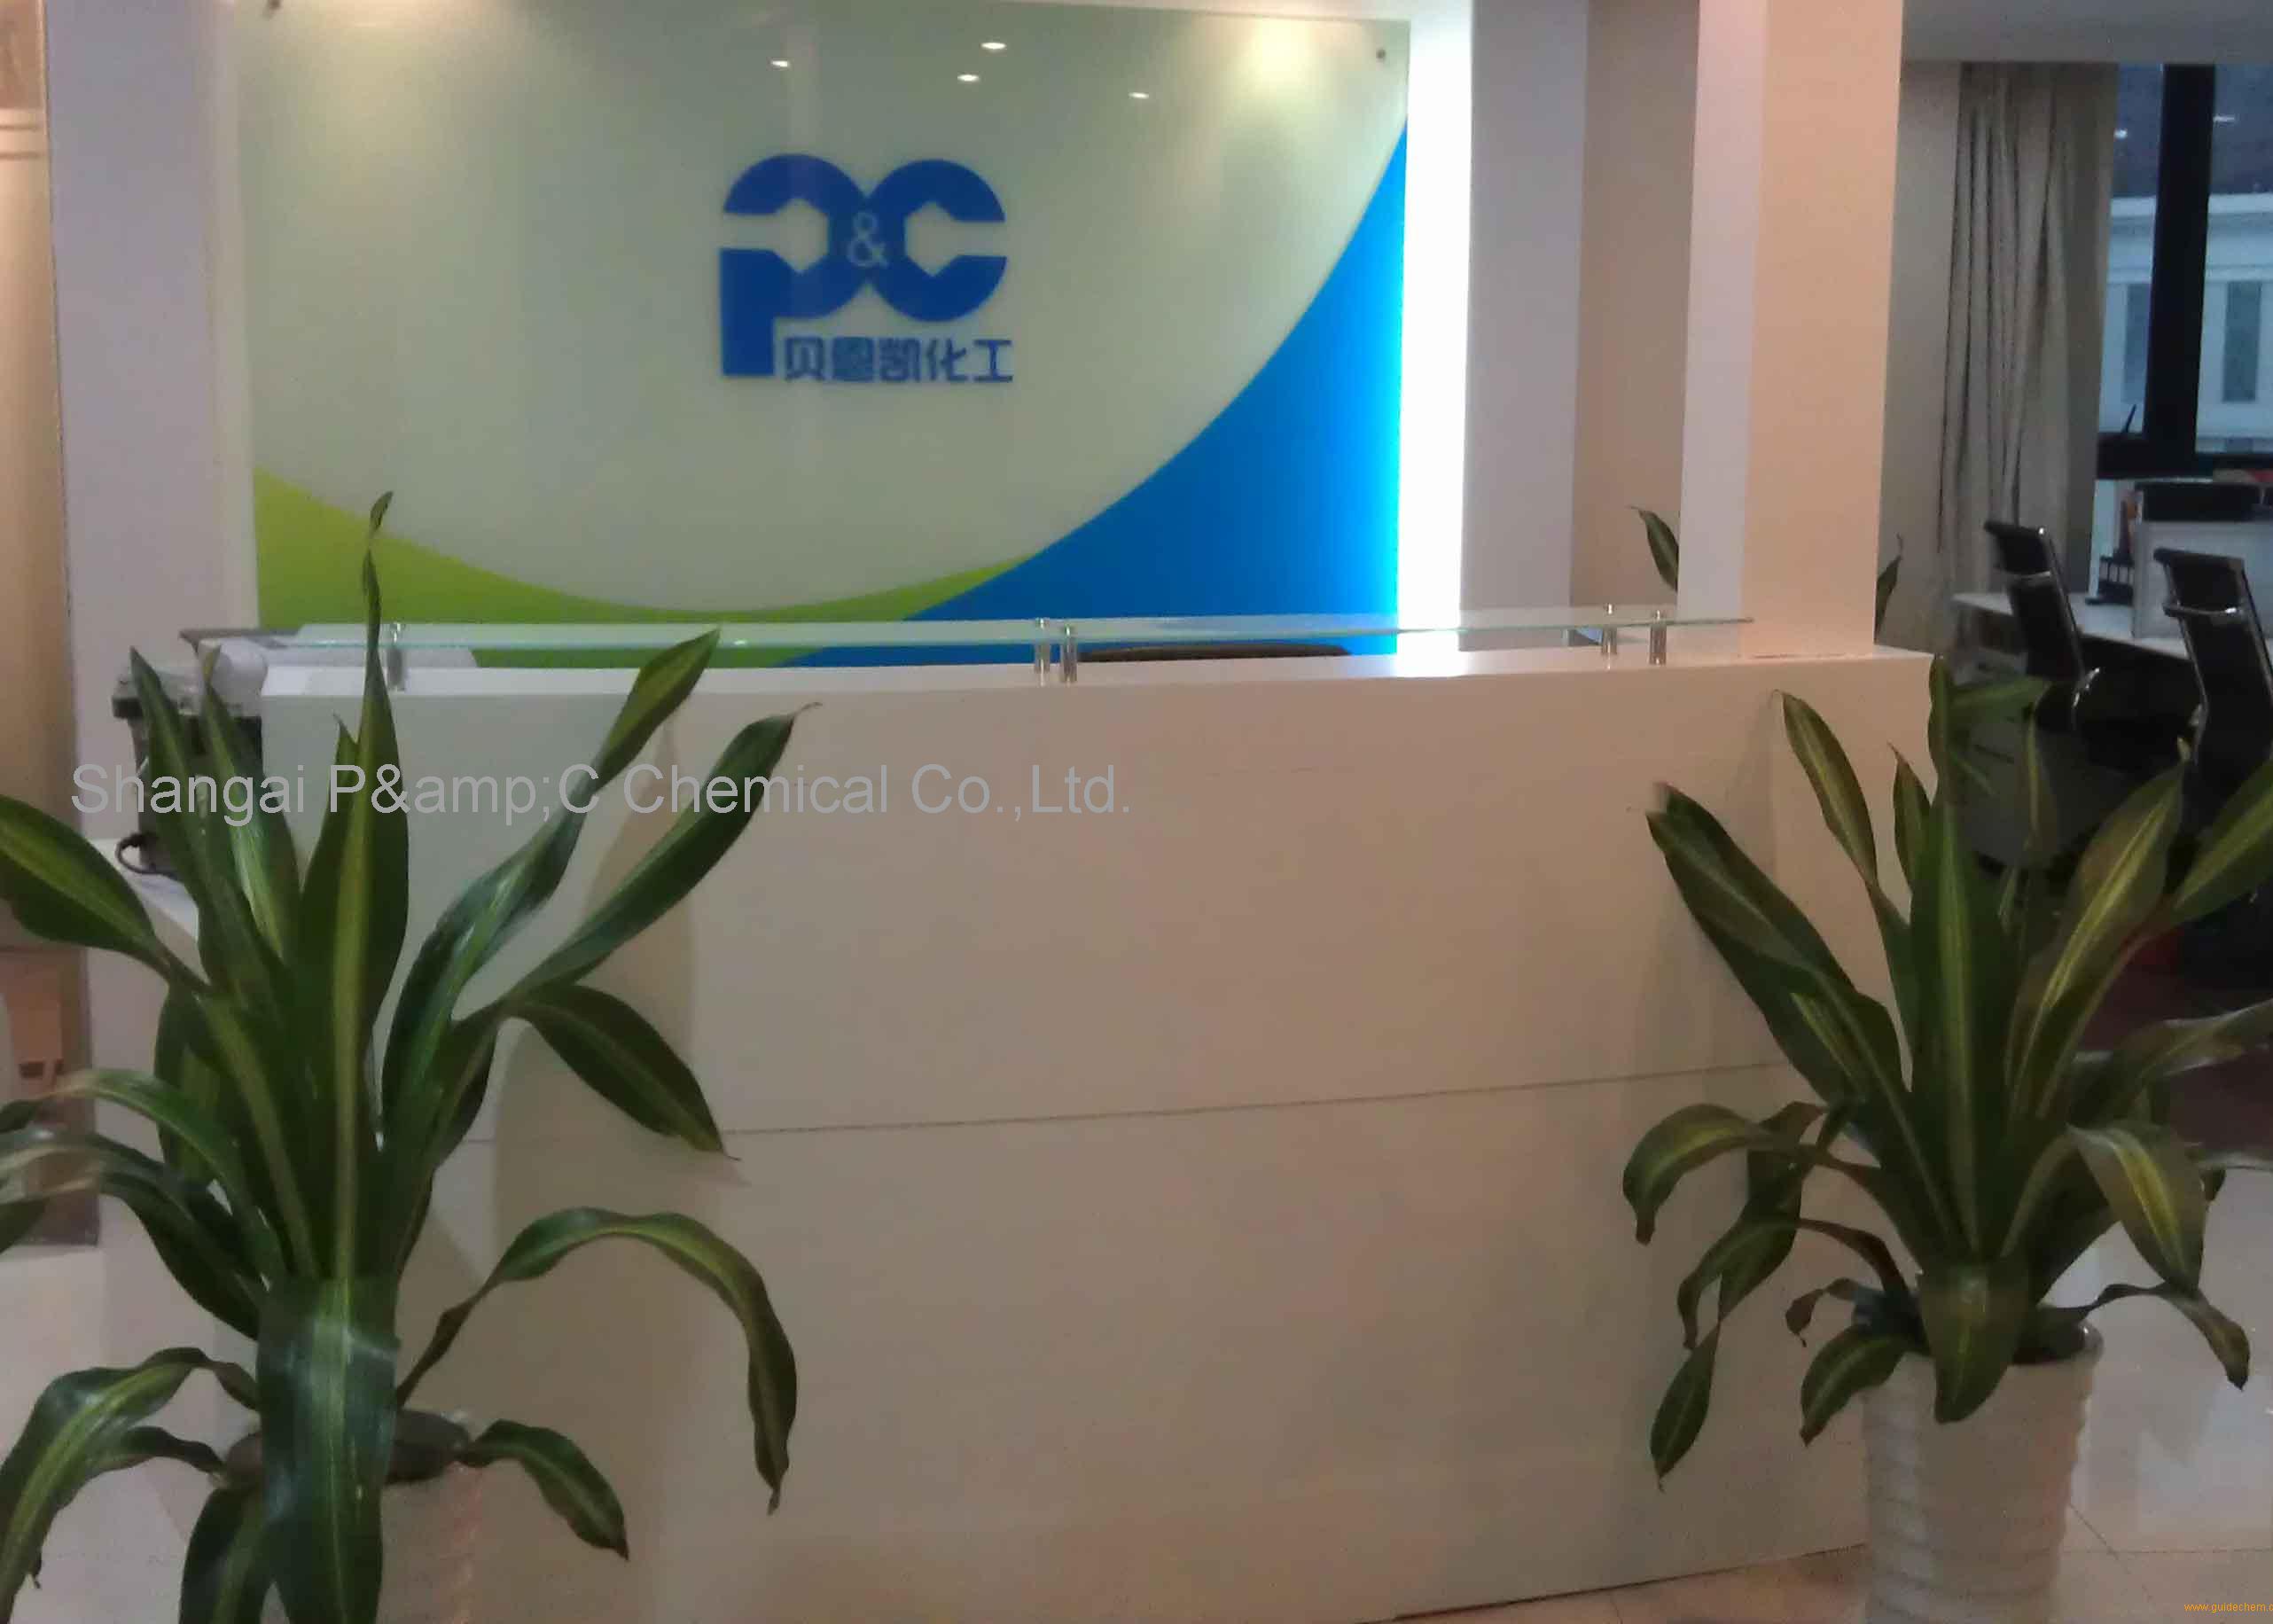 Shangai P&C Chemical Co.,Ltd.